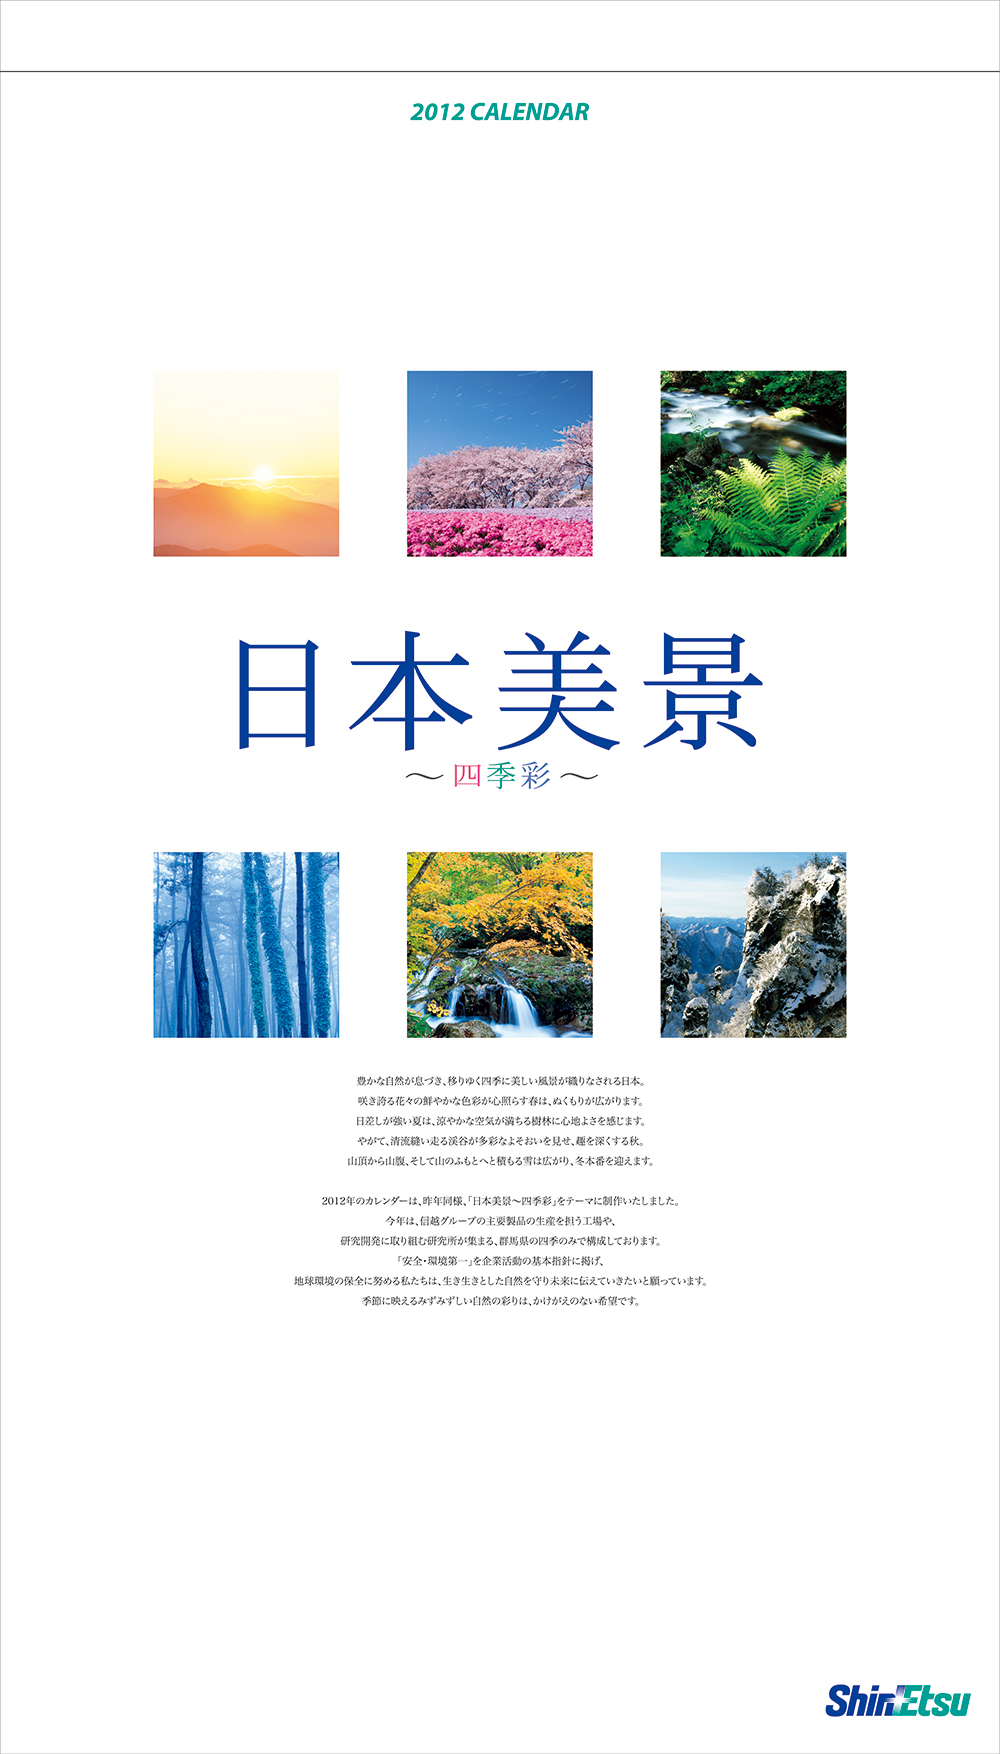 Etsu Spring 2022 Calendar Colors Of The Seasons: Japan's Scenic Beauty | Shin-Etsu Group Original  Calendar | Shin-Etsu Chemical Co., Ltd.